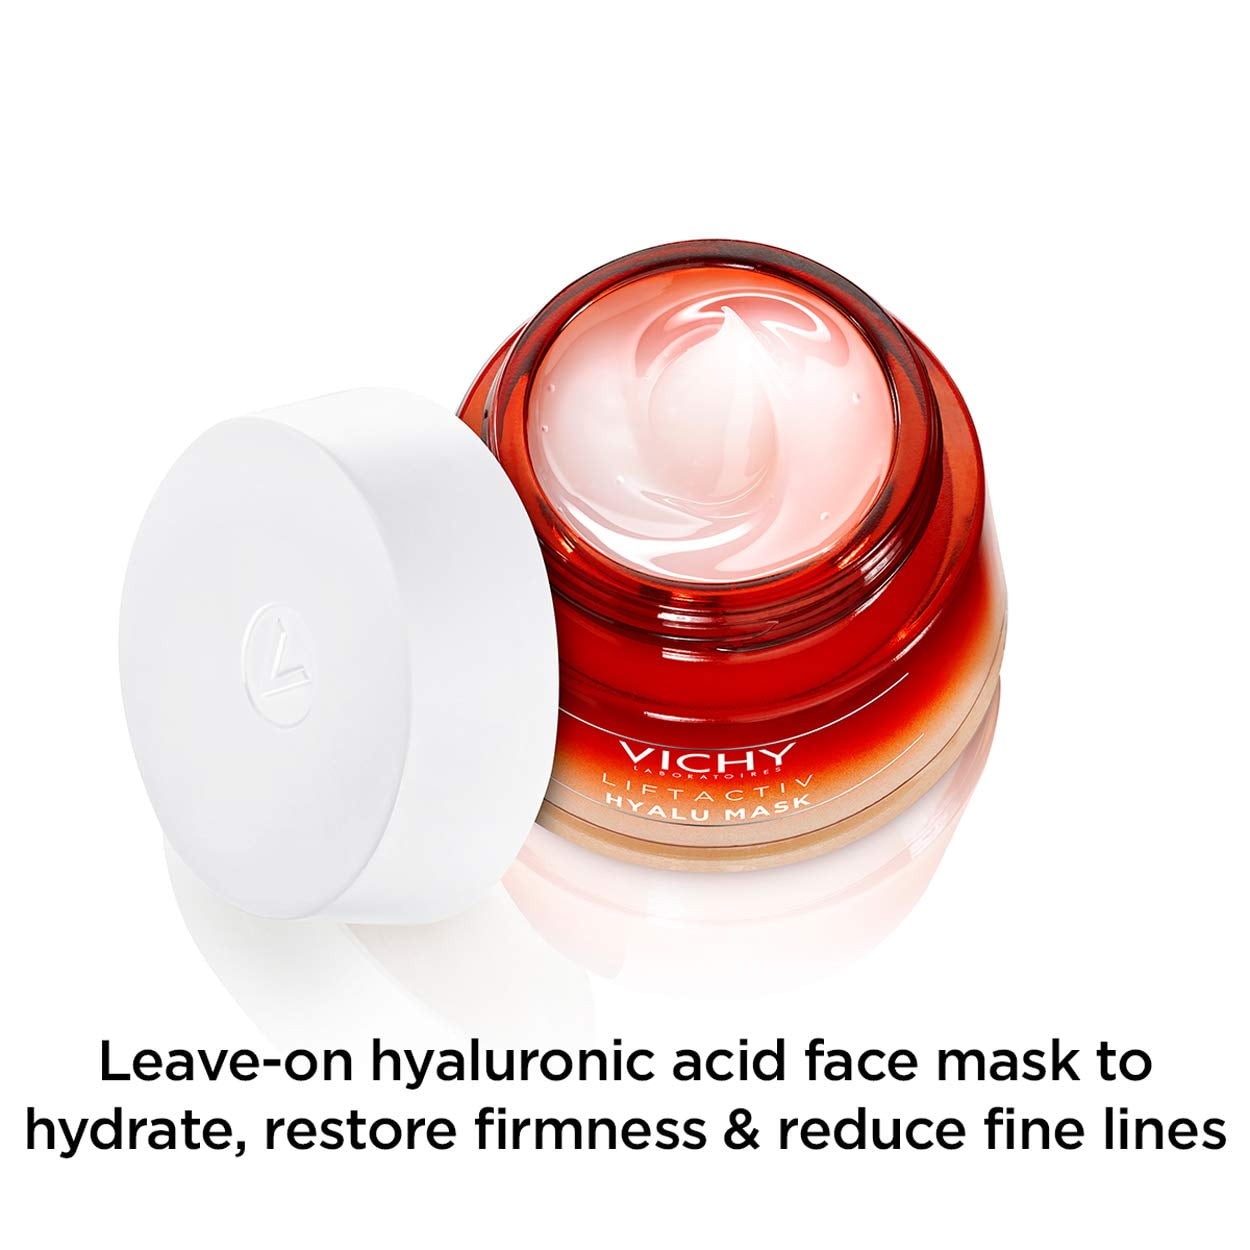 Syndicaat opslag been Vichy LiftActiv Hyalu (Hyaluronic Acid) Face Mask 50ml - 1.69Fl.oz All skin  types - Walmart.com